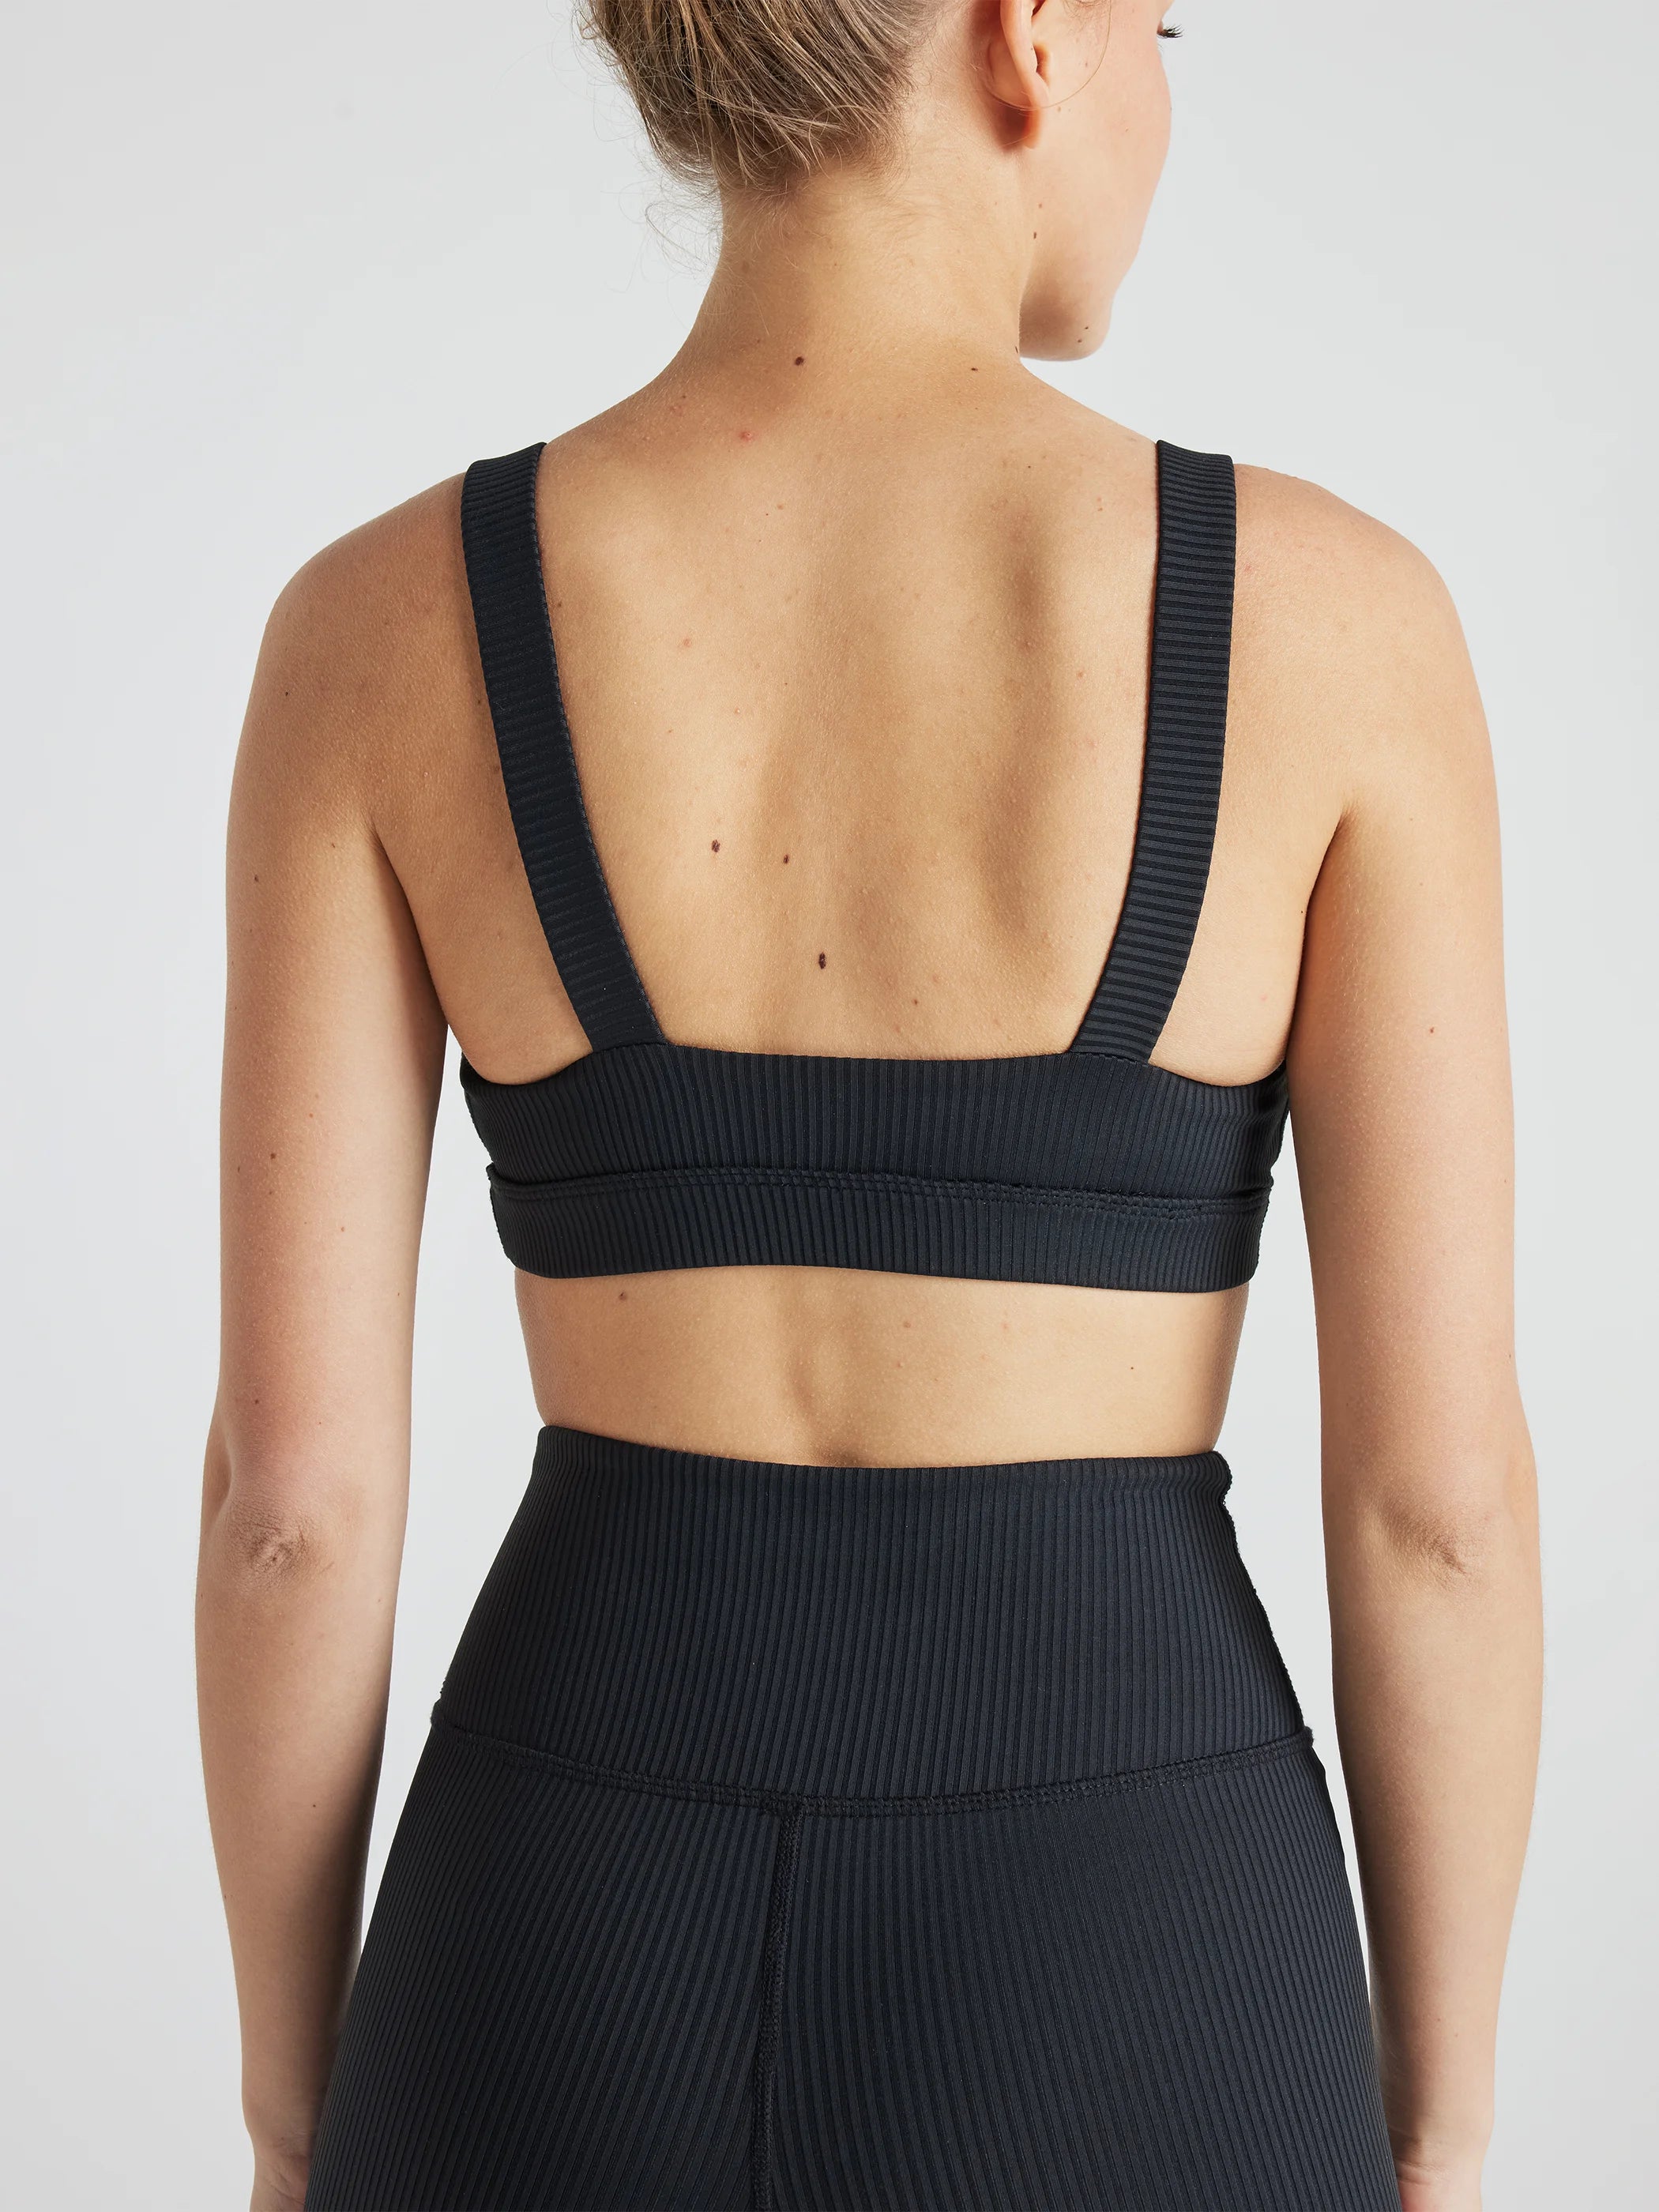 Model wears sustainable square neck black nylon rib sports bra